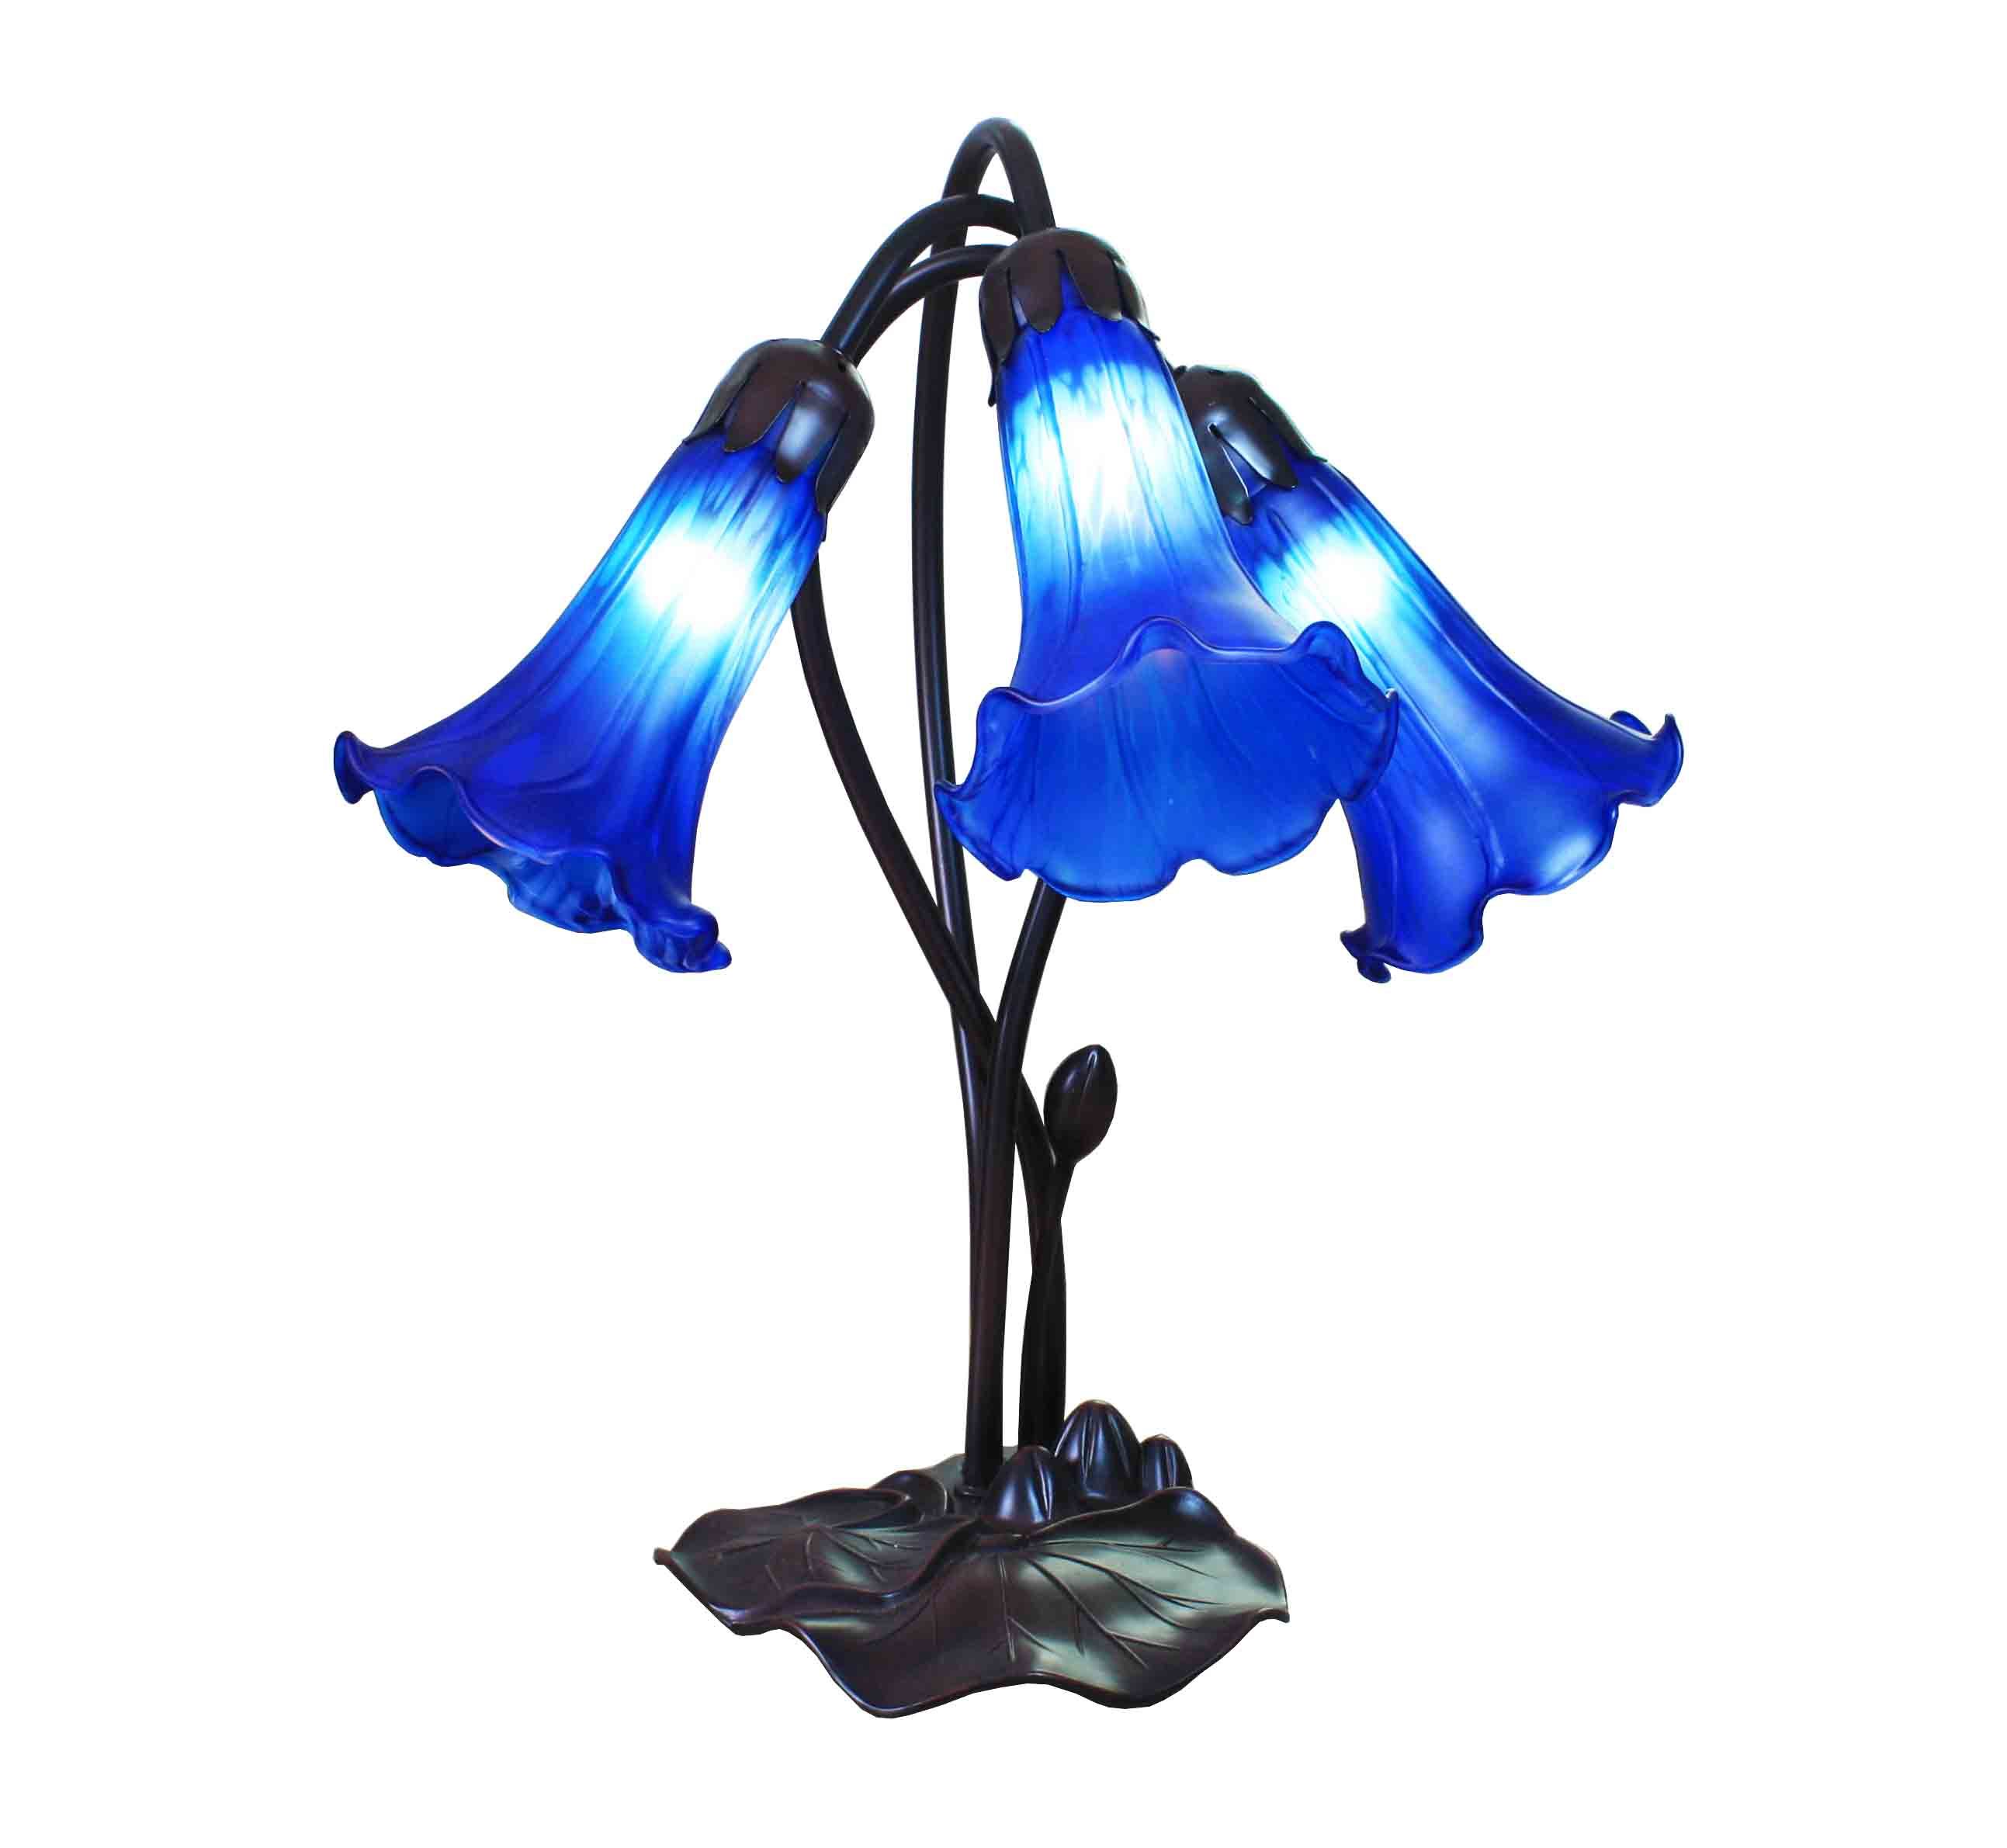 Tiffany Art Table Lamp 614